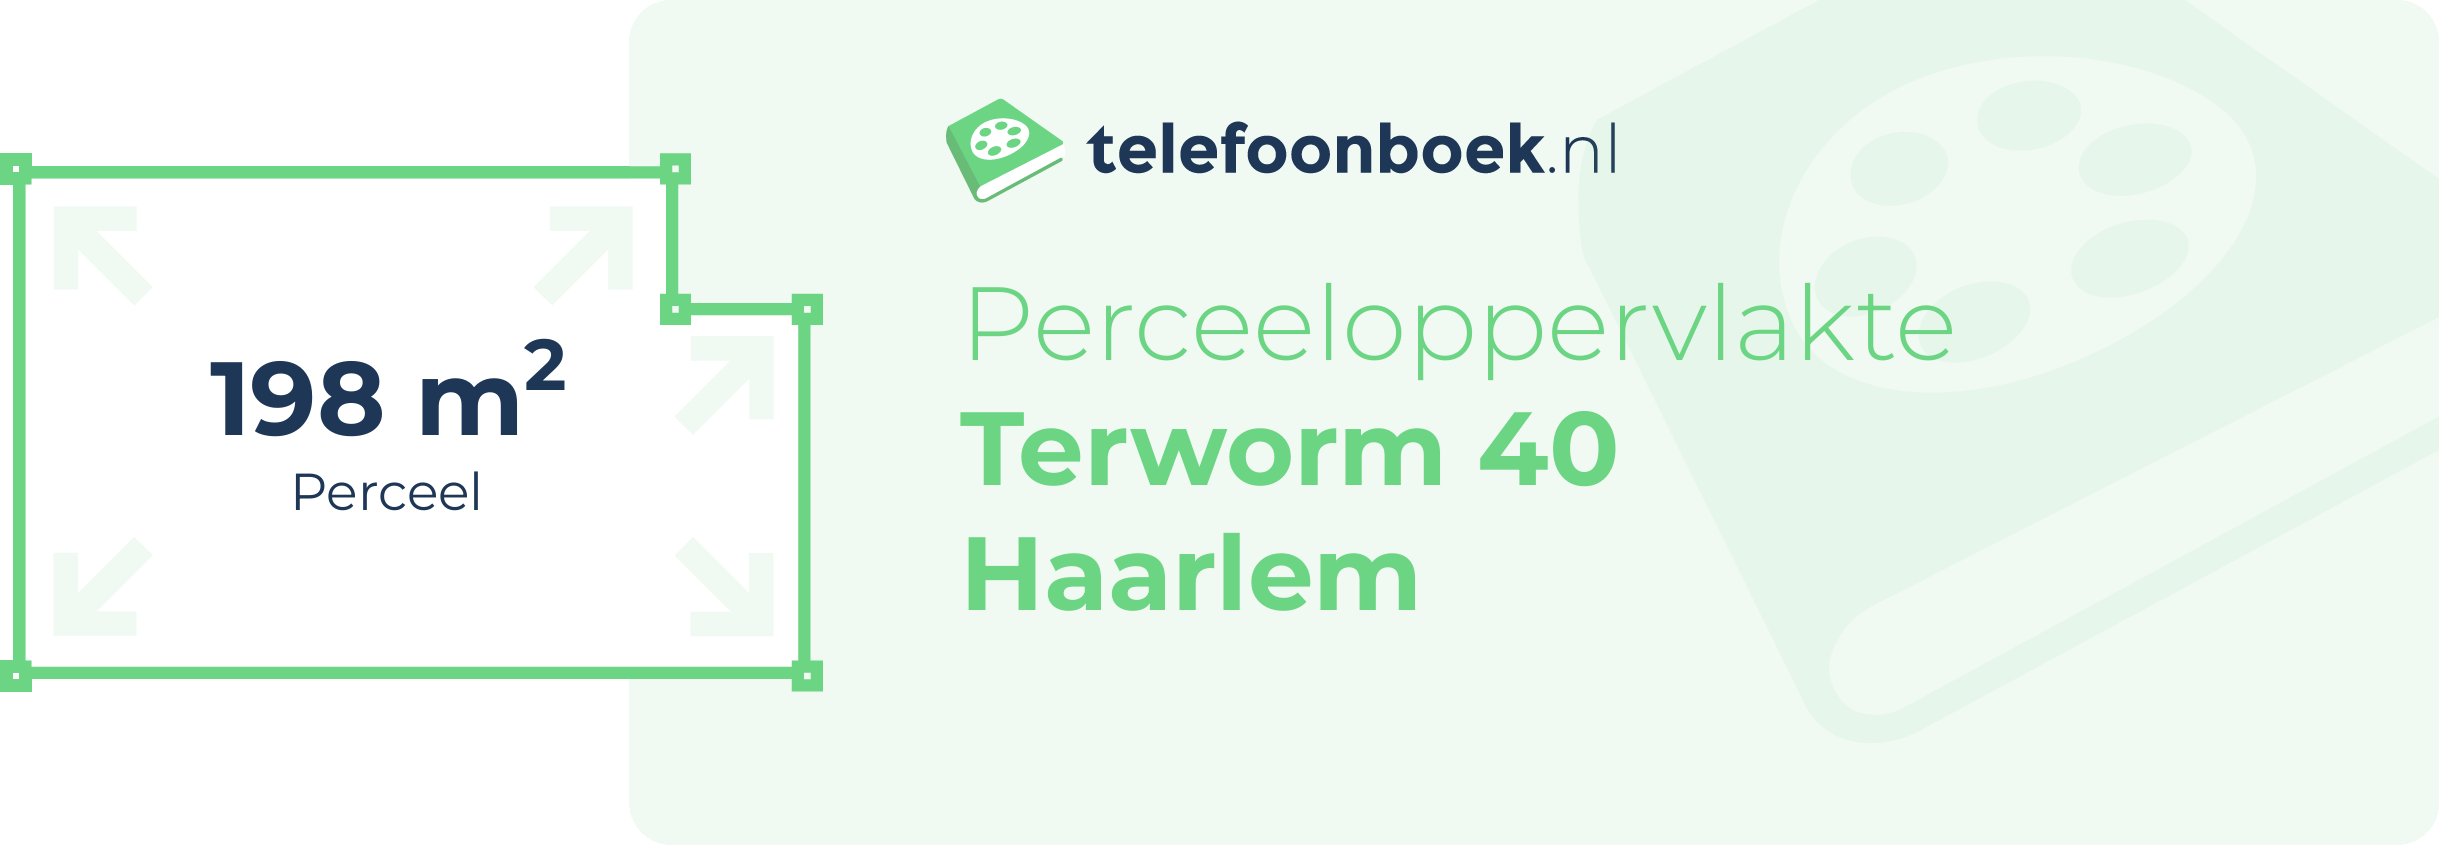 Perceeloppervlakte Terworm 40 Haarlem